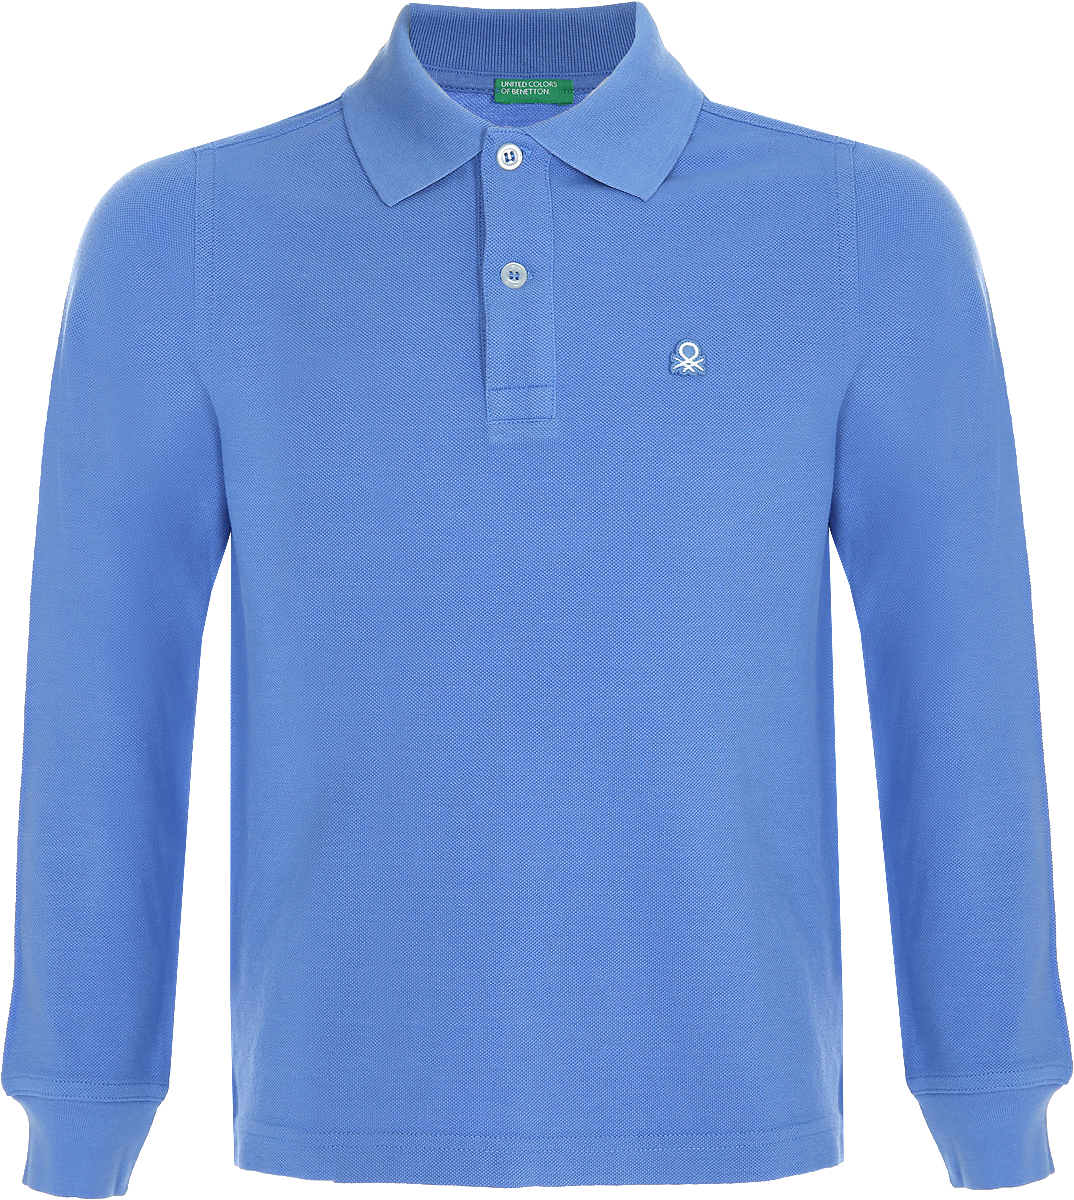 Кофта для мальчика United Colors of Benetton, цвет: голубой. 3089C3090_26R. Размер 90